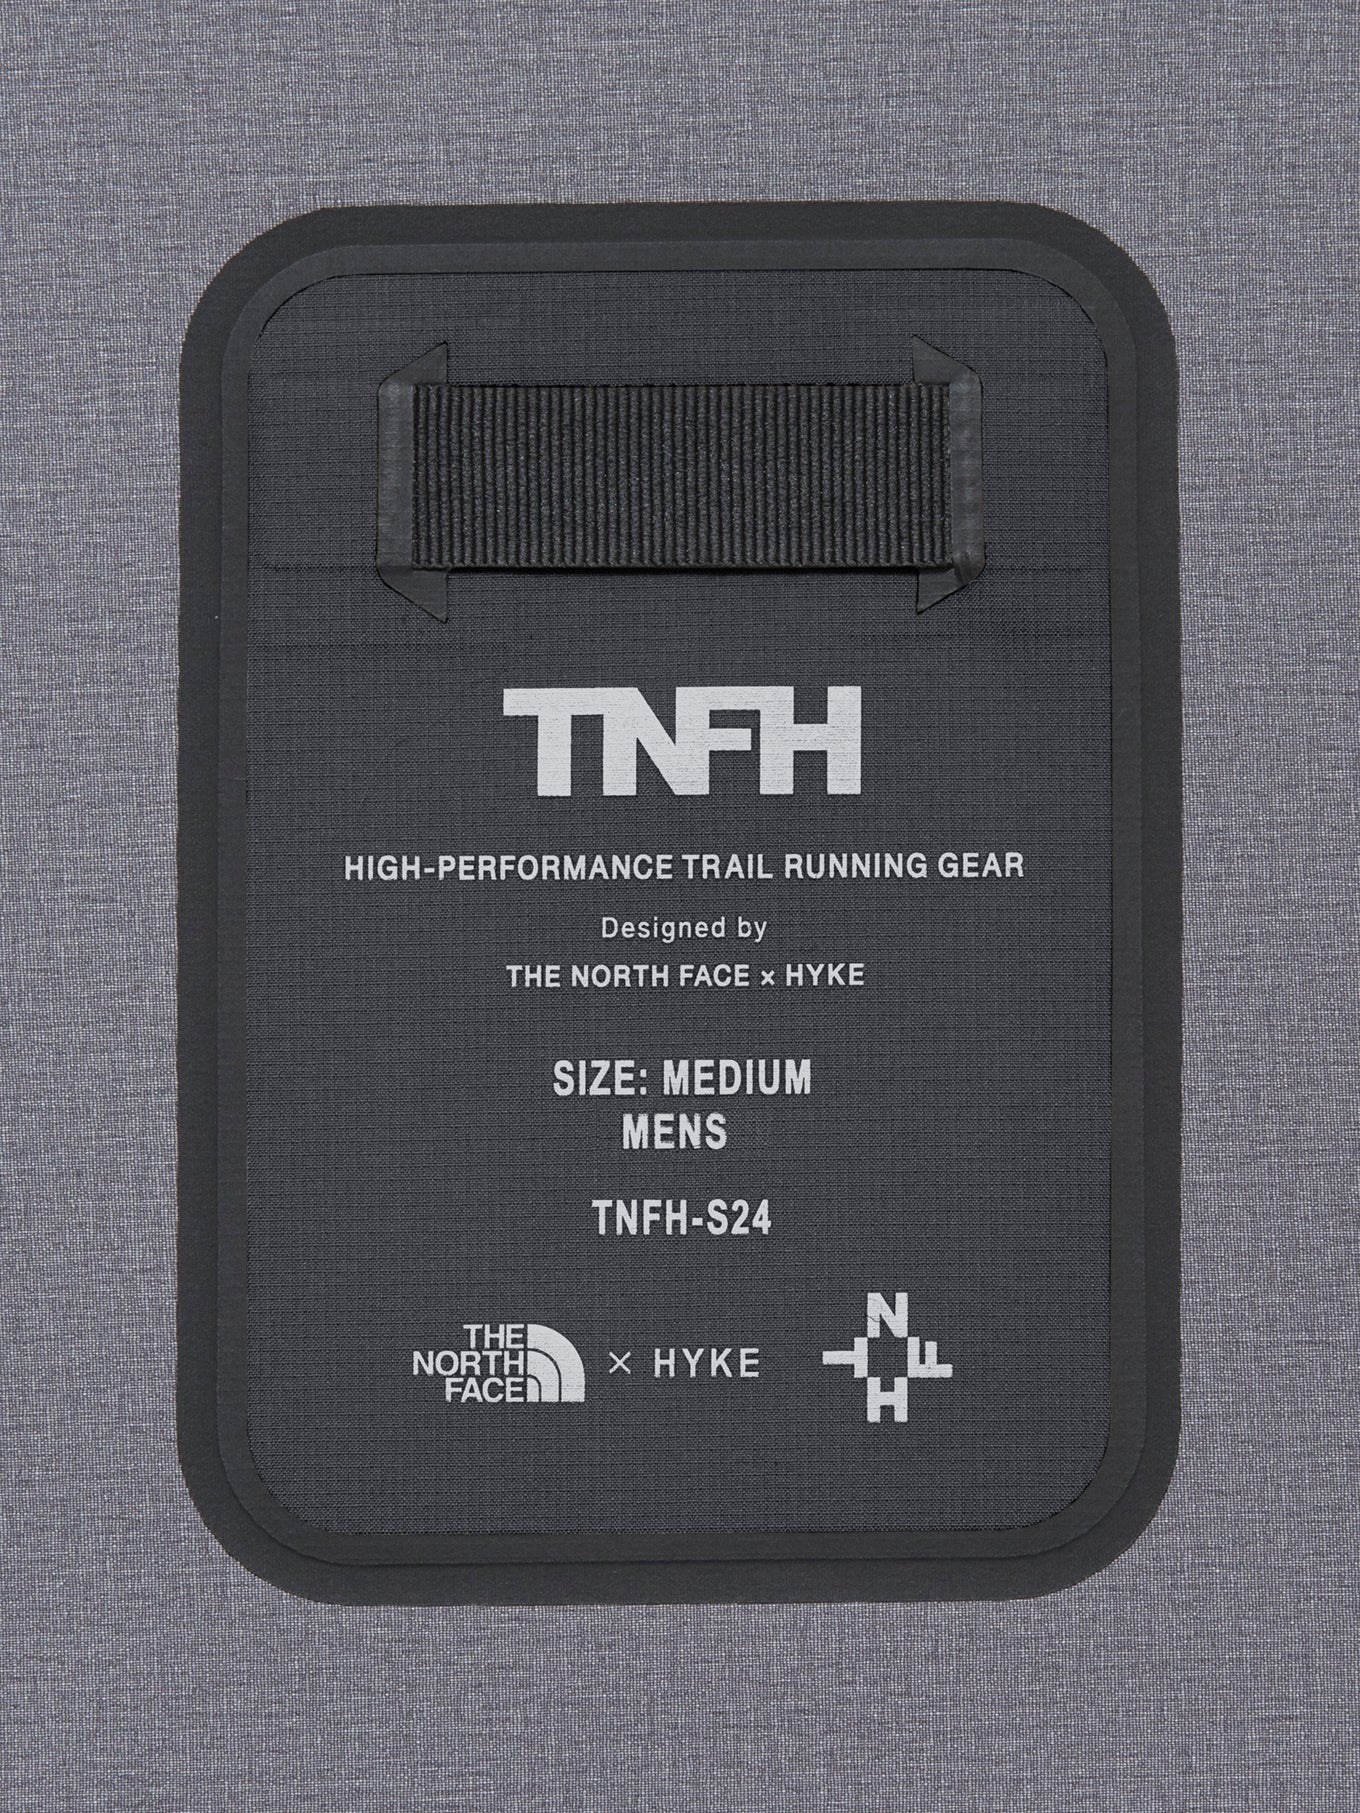 GTX Trail Long Jacket (Mens)<br>TNFH  THE NORTH FACE × HYKE